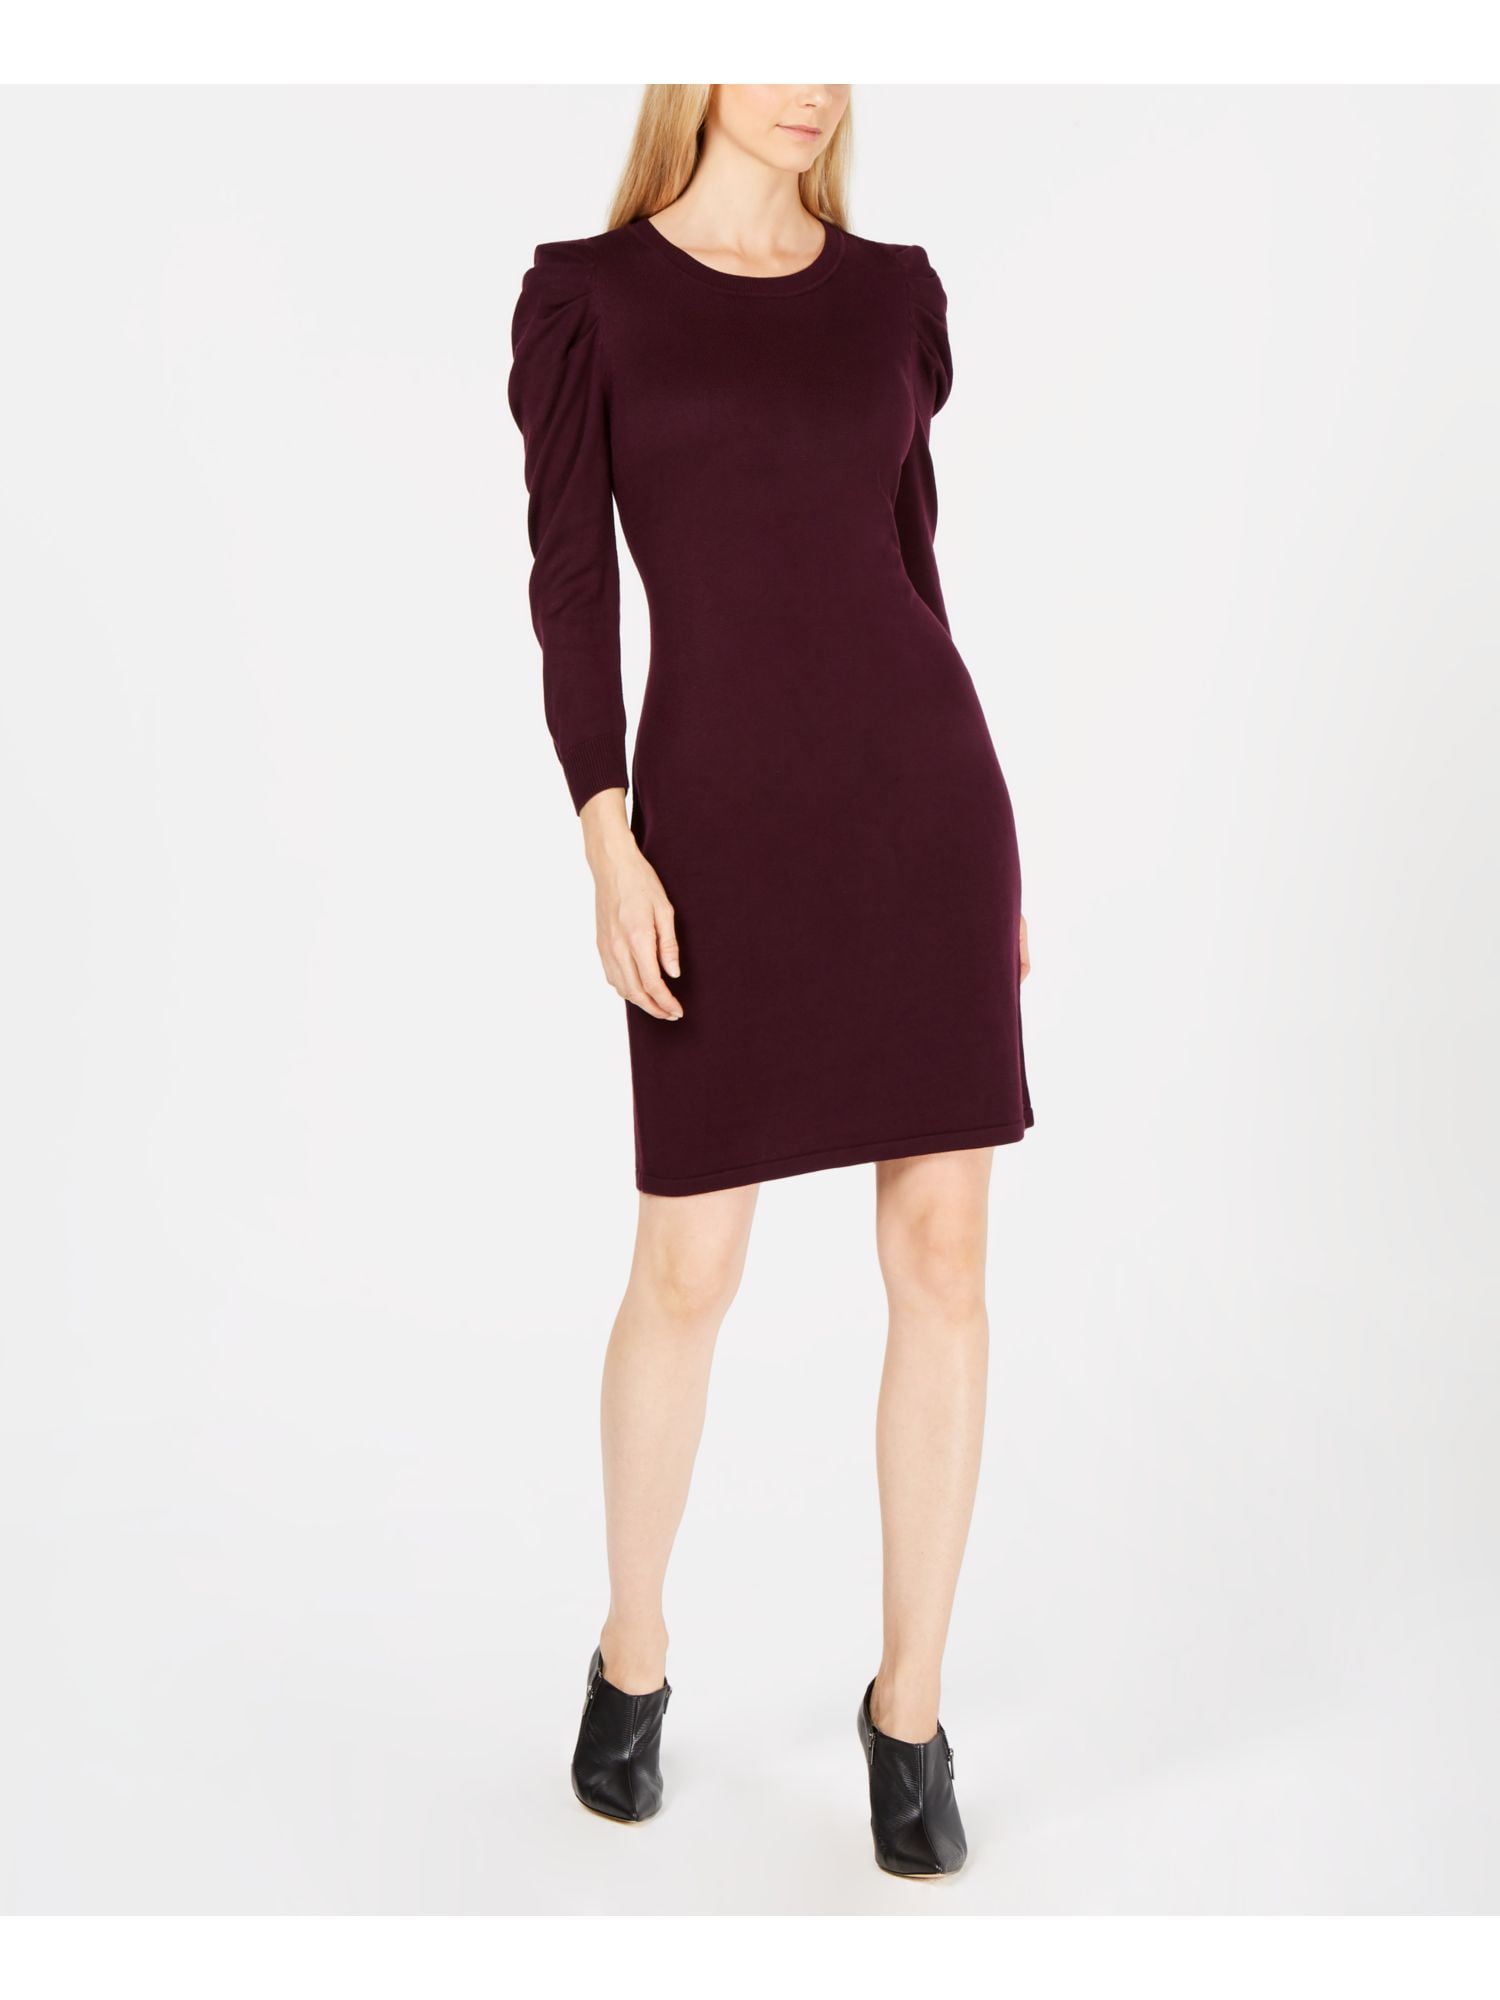 CALVIN KLEIN $134 Womens New 1274 Burgundy Long Sleeve Shift Dress L B+B -  